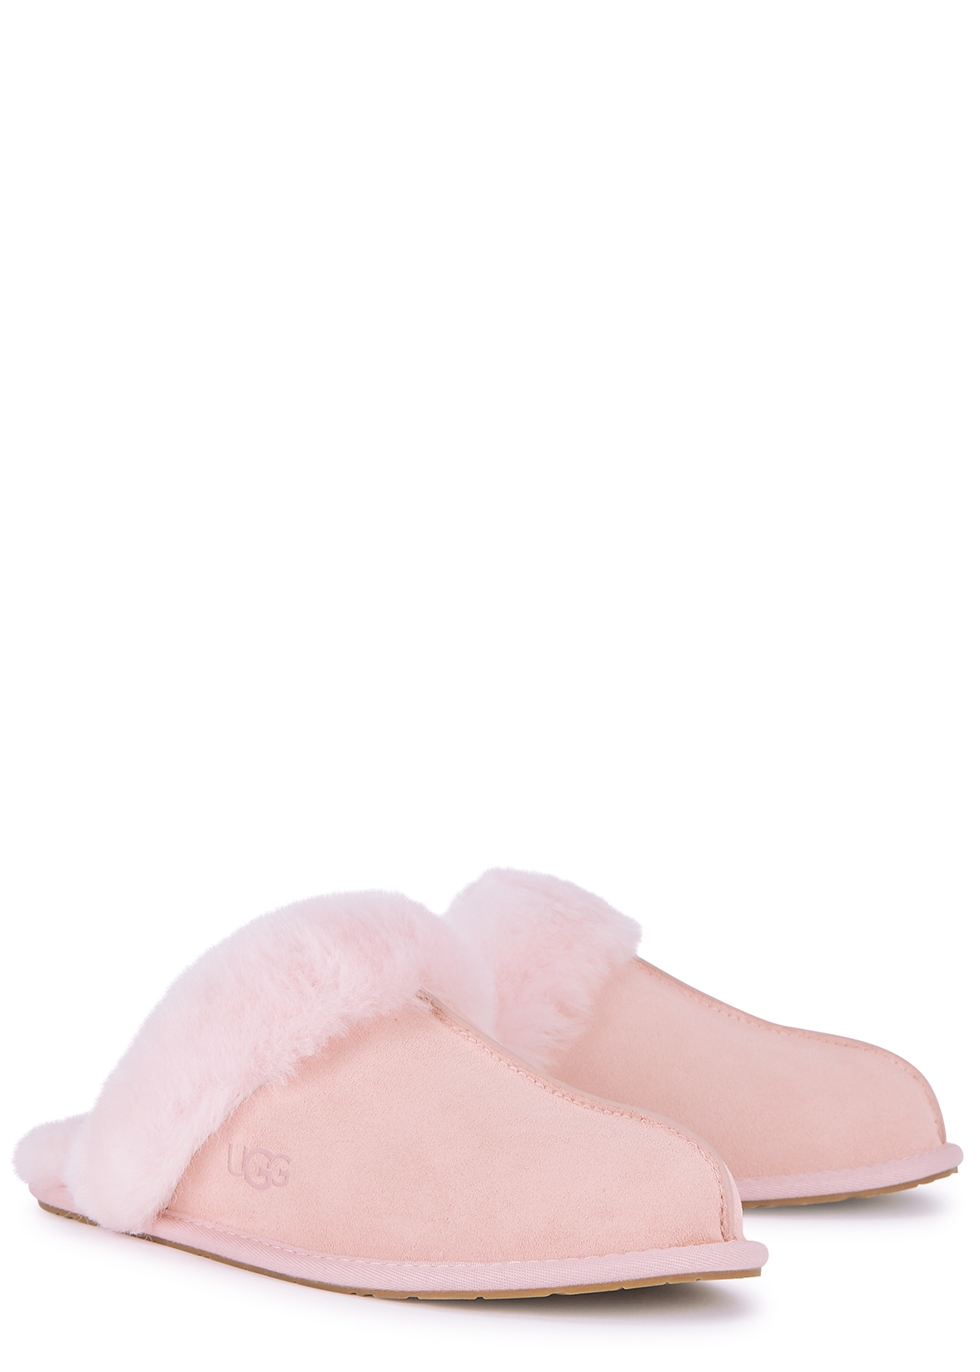 UGG Scuffette II pink suede slippers 